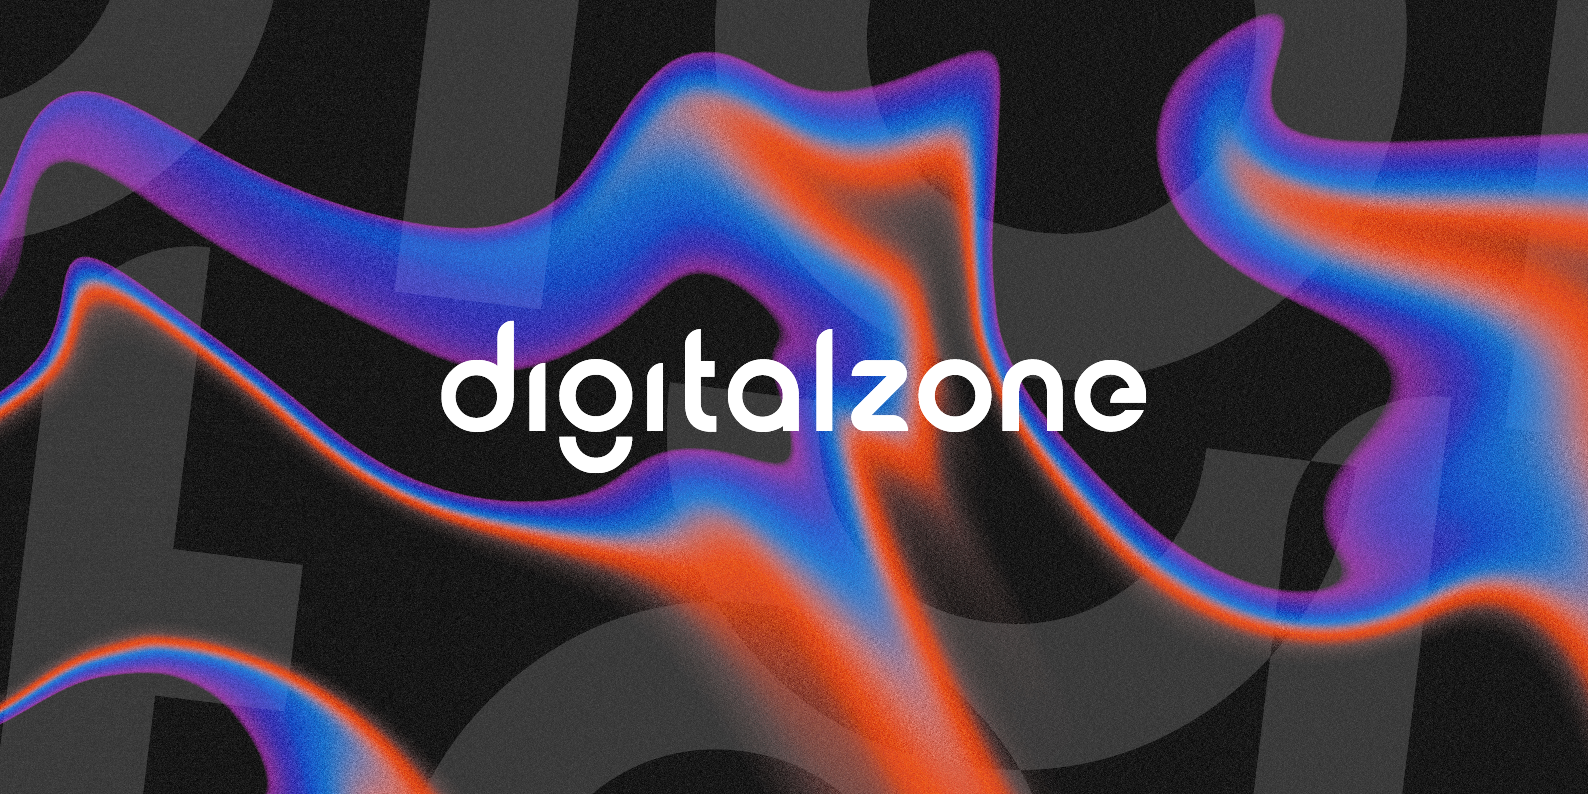 Digitalzone Press Release